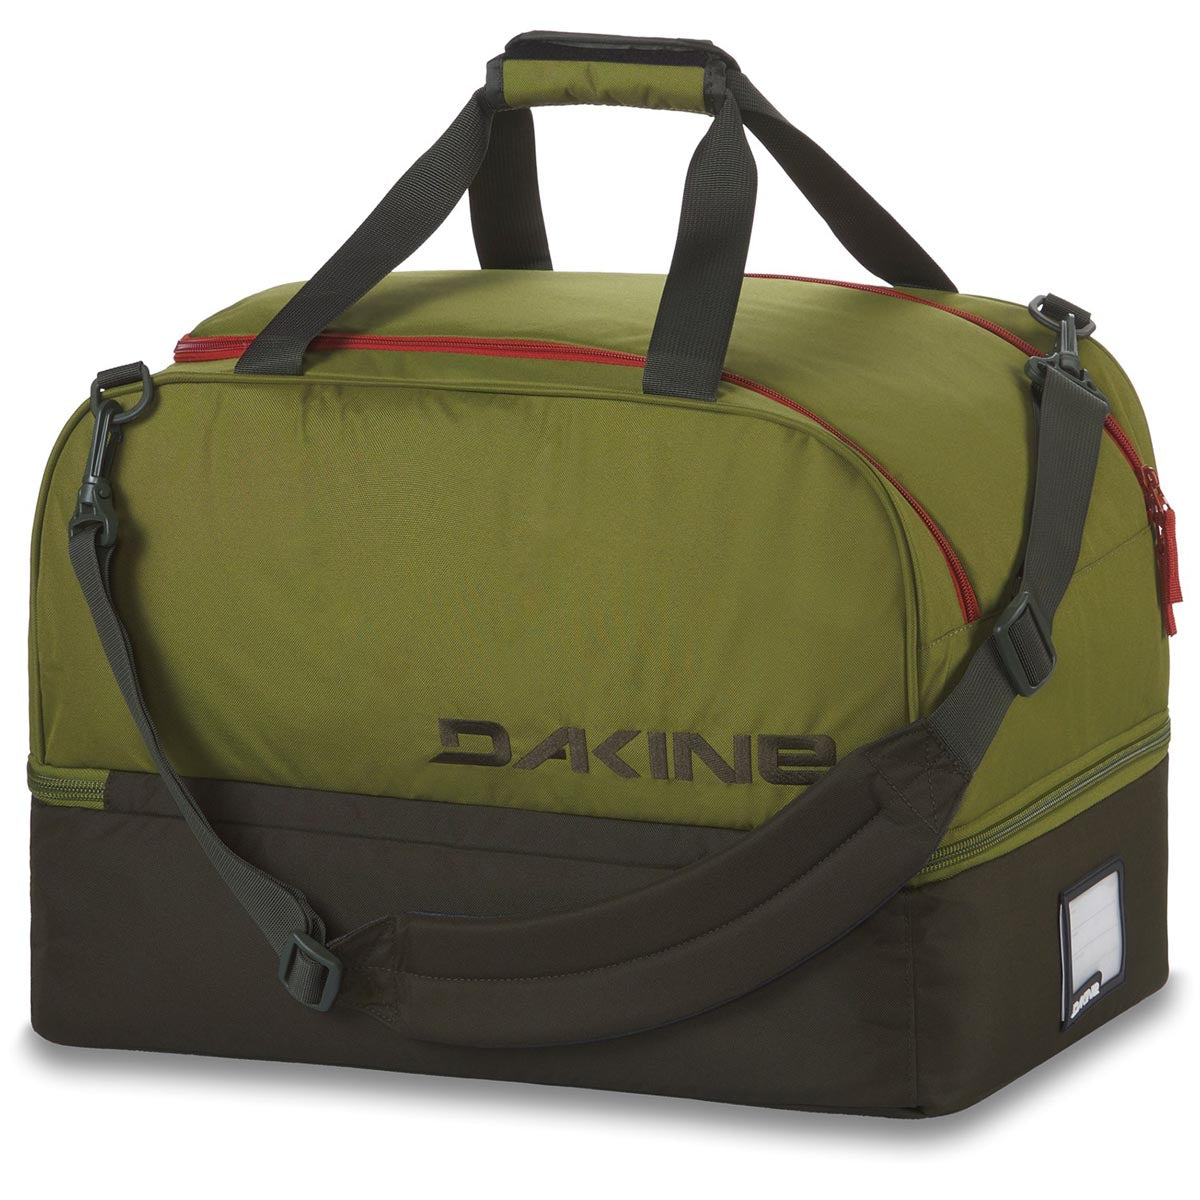 Dakine Boot Locker 69l Snowboard Boot Bag - Utility Green image 2